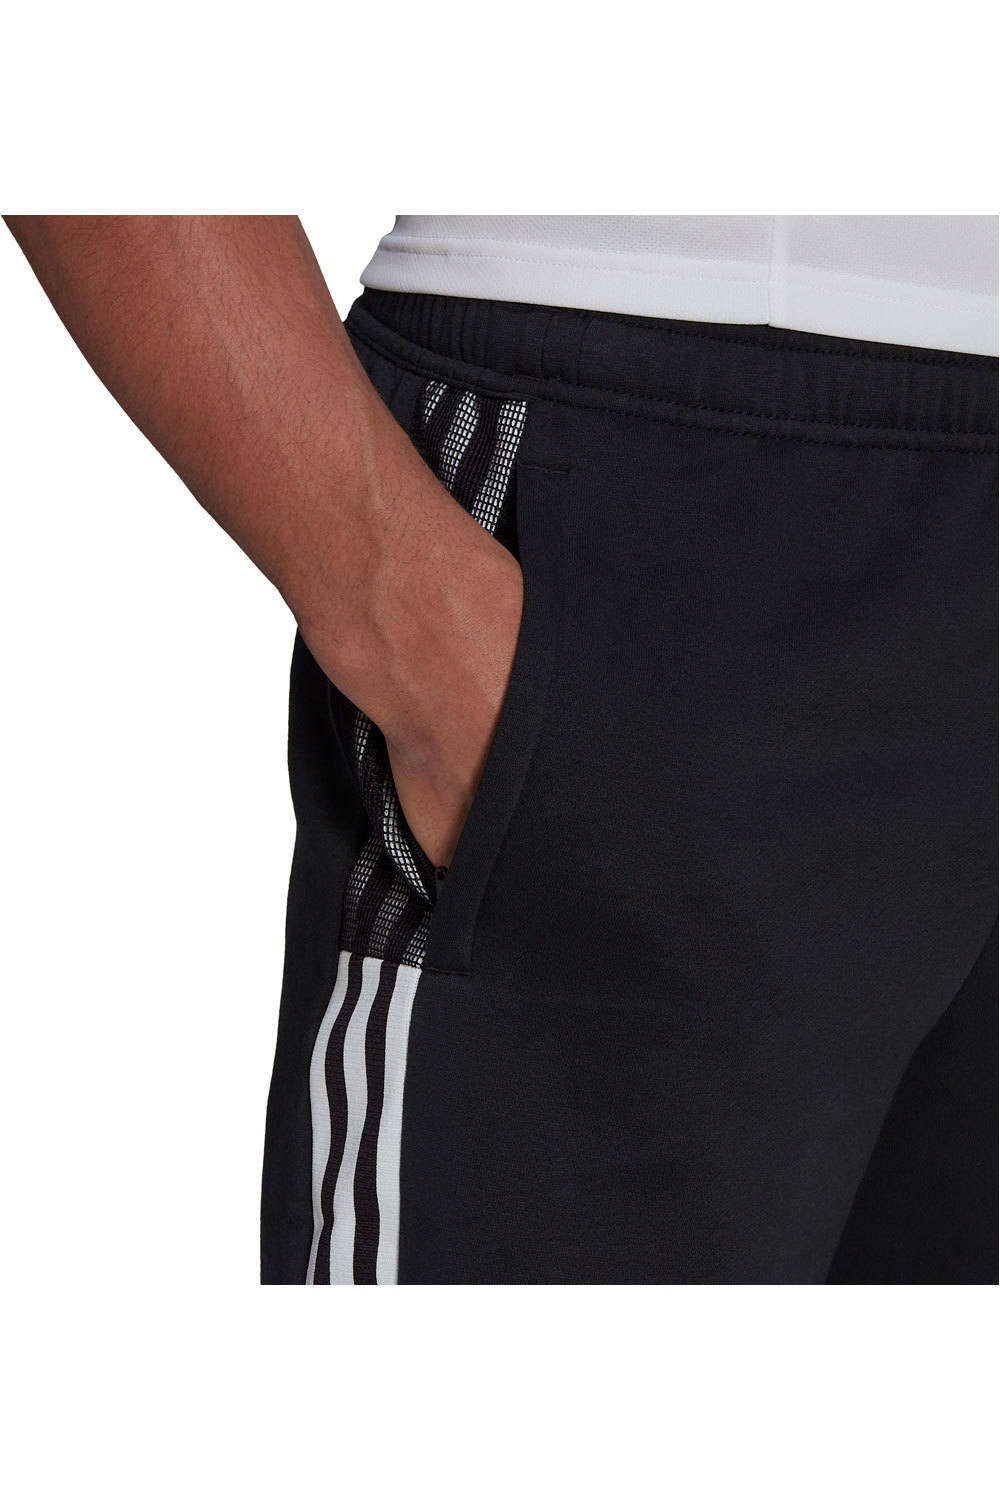 adidas pantalones cortos futbol Tiro 21 vista detalle